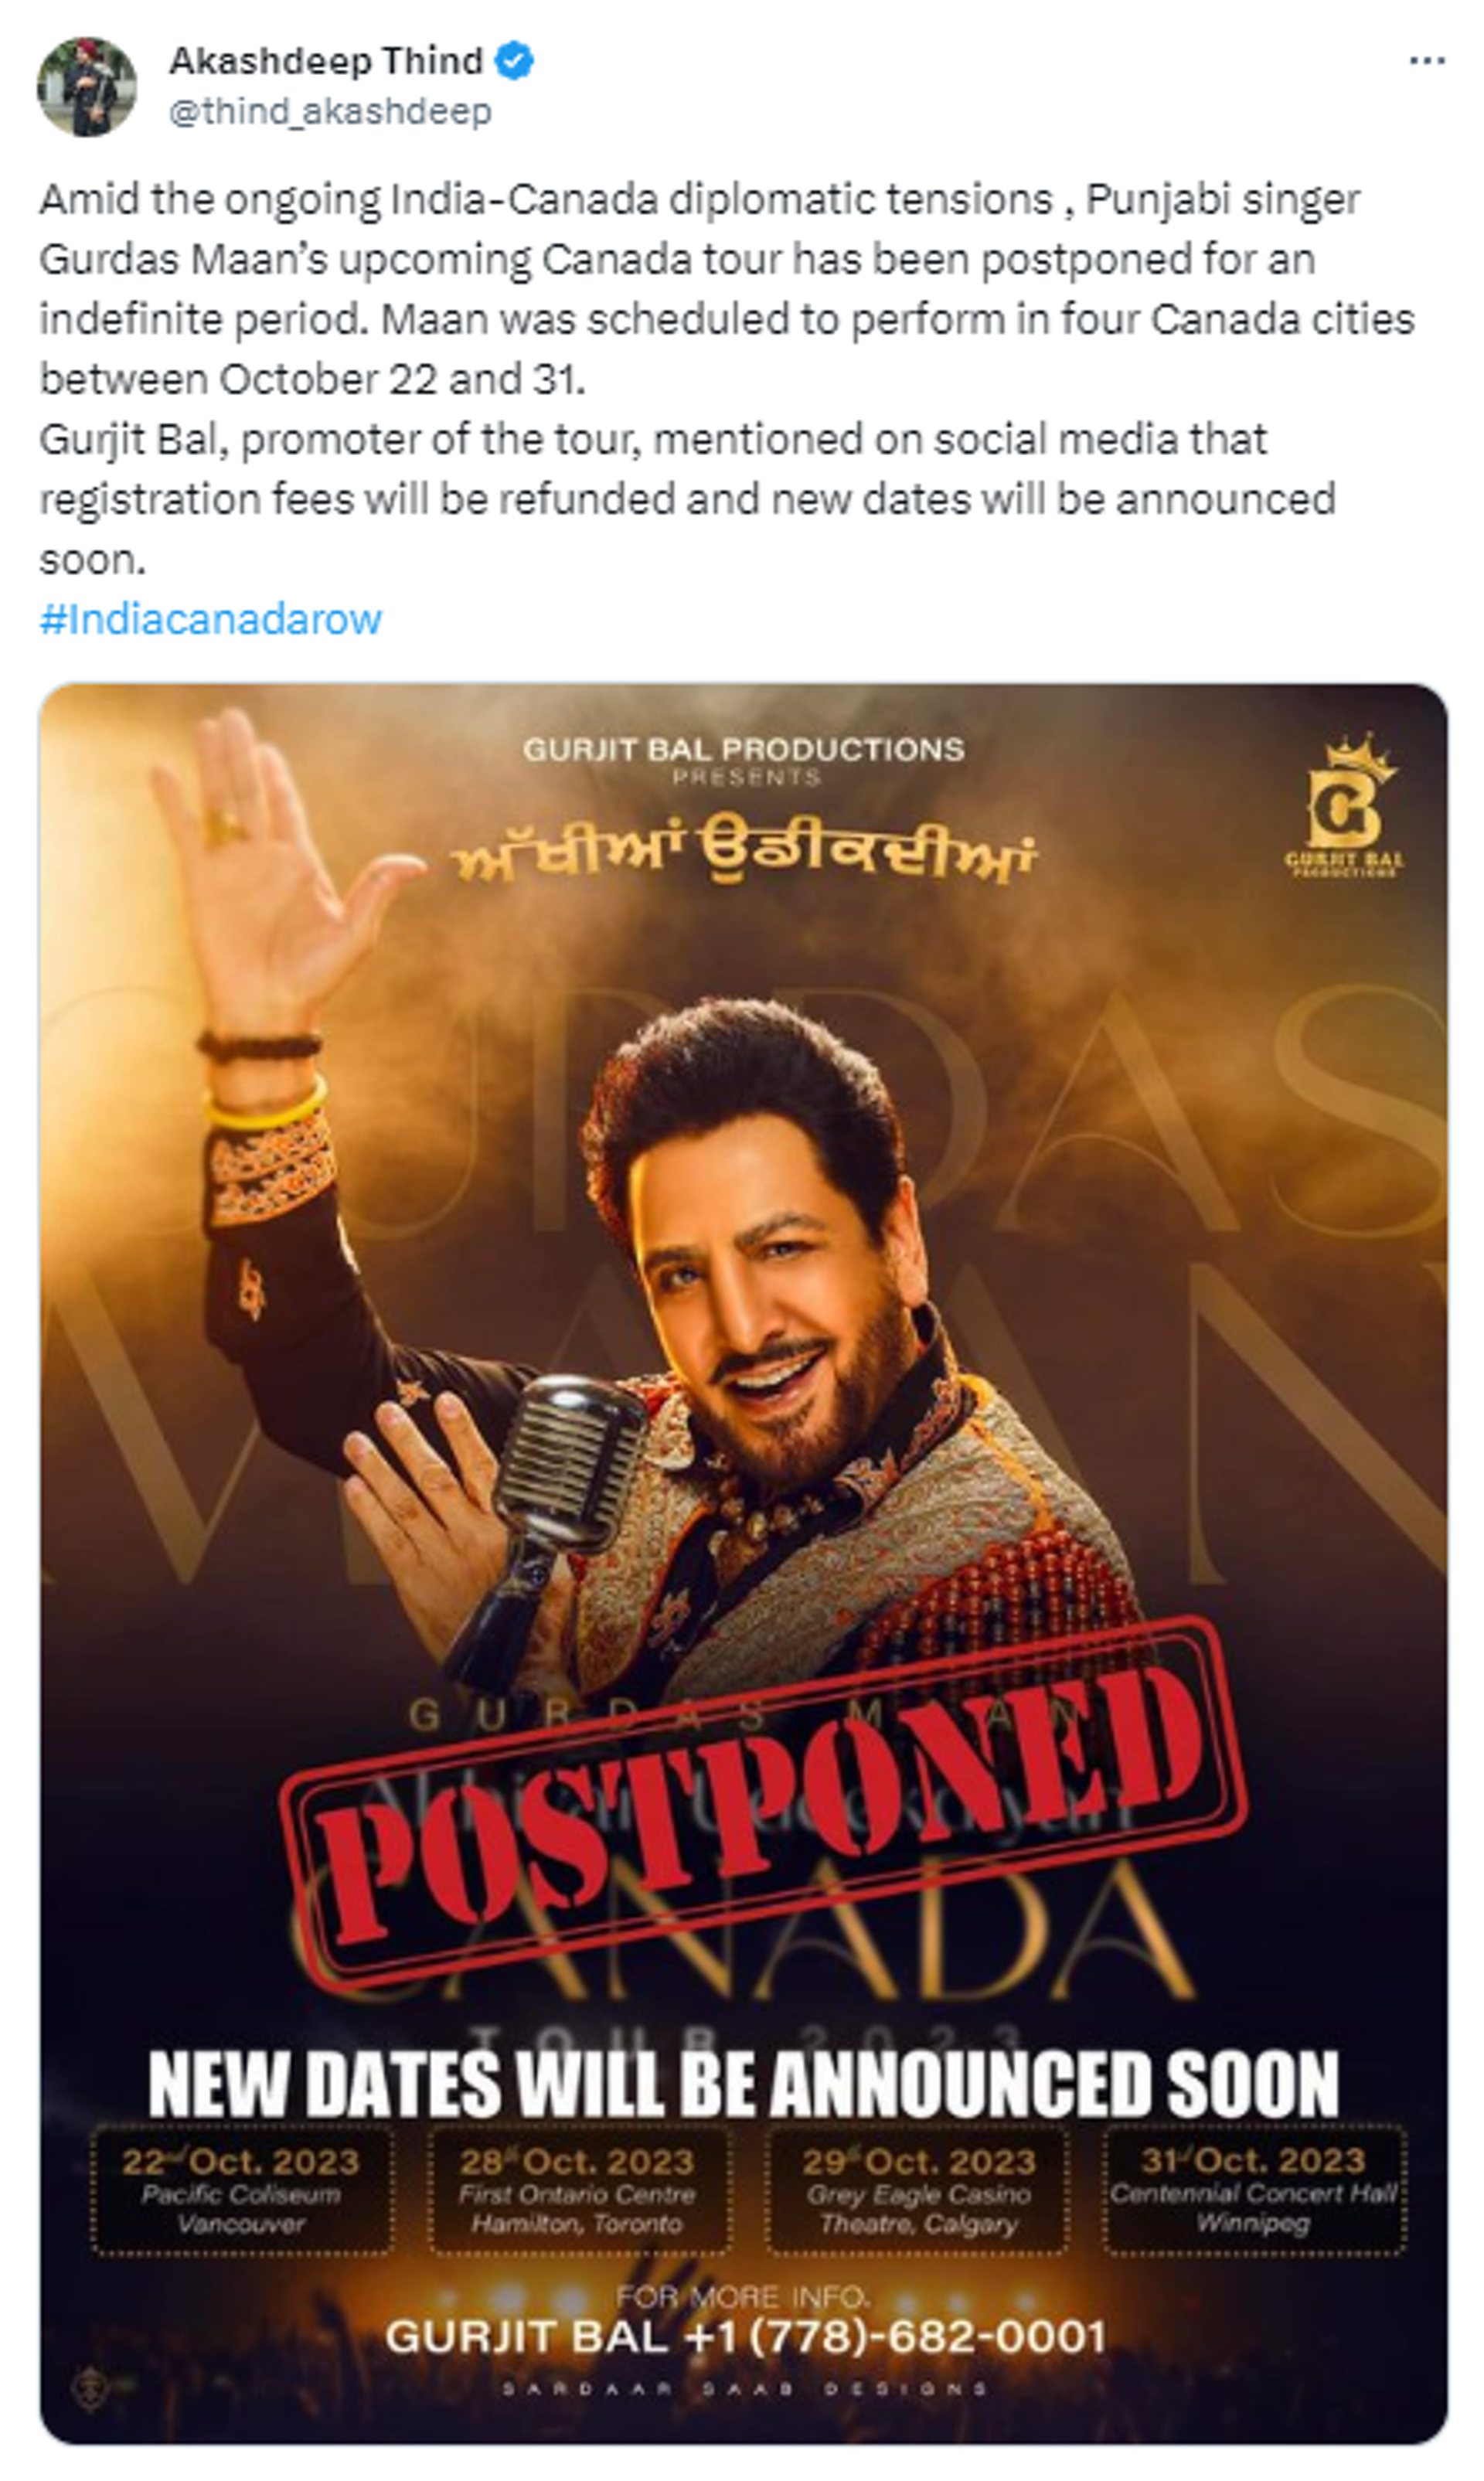 Ace Punjabi Singer Gurdas Mann Cancels Canada Tour Amid Rising Tensions Between India, Canada - Sputnik India, 1920, 09.10.2023